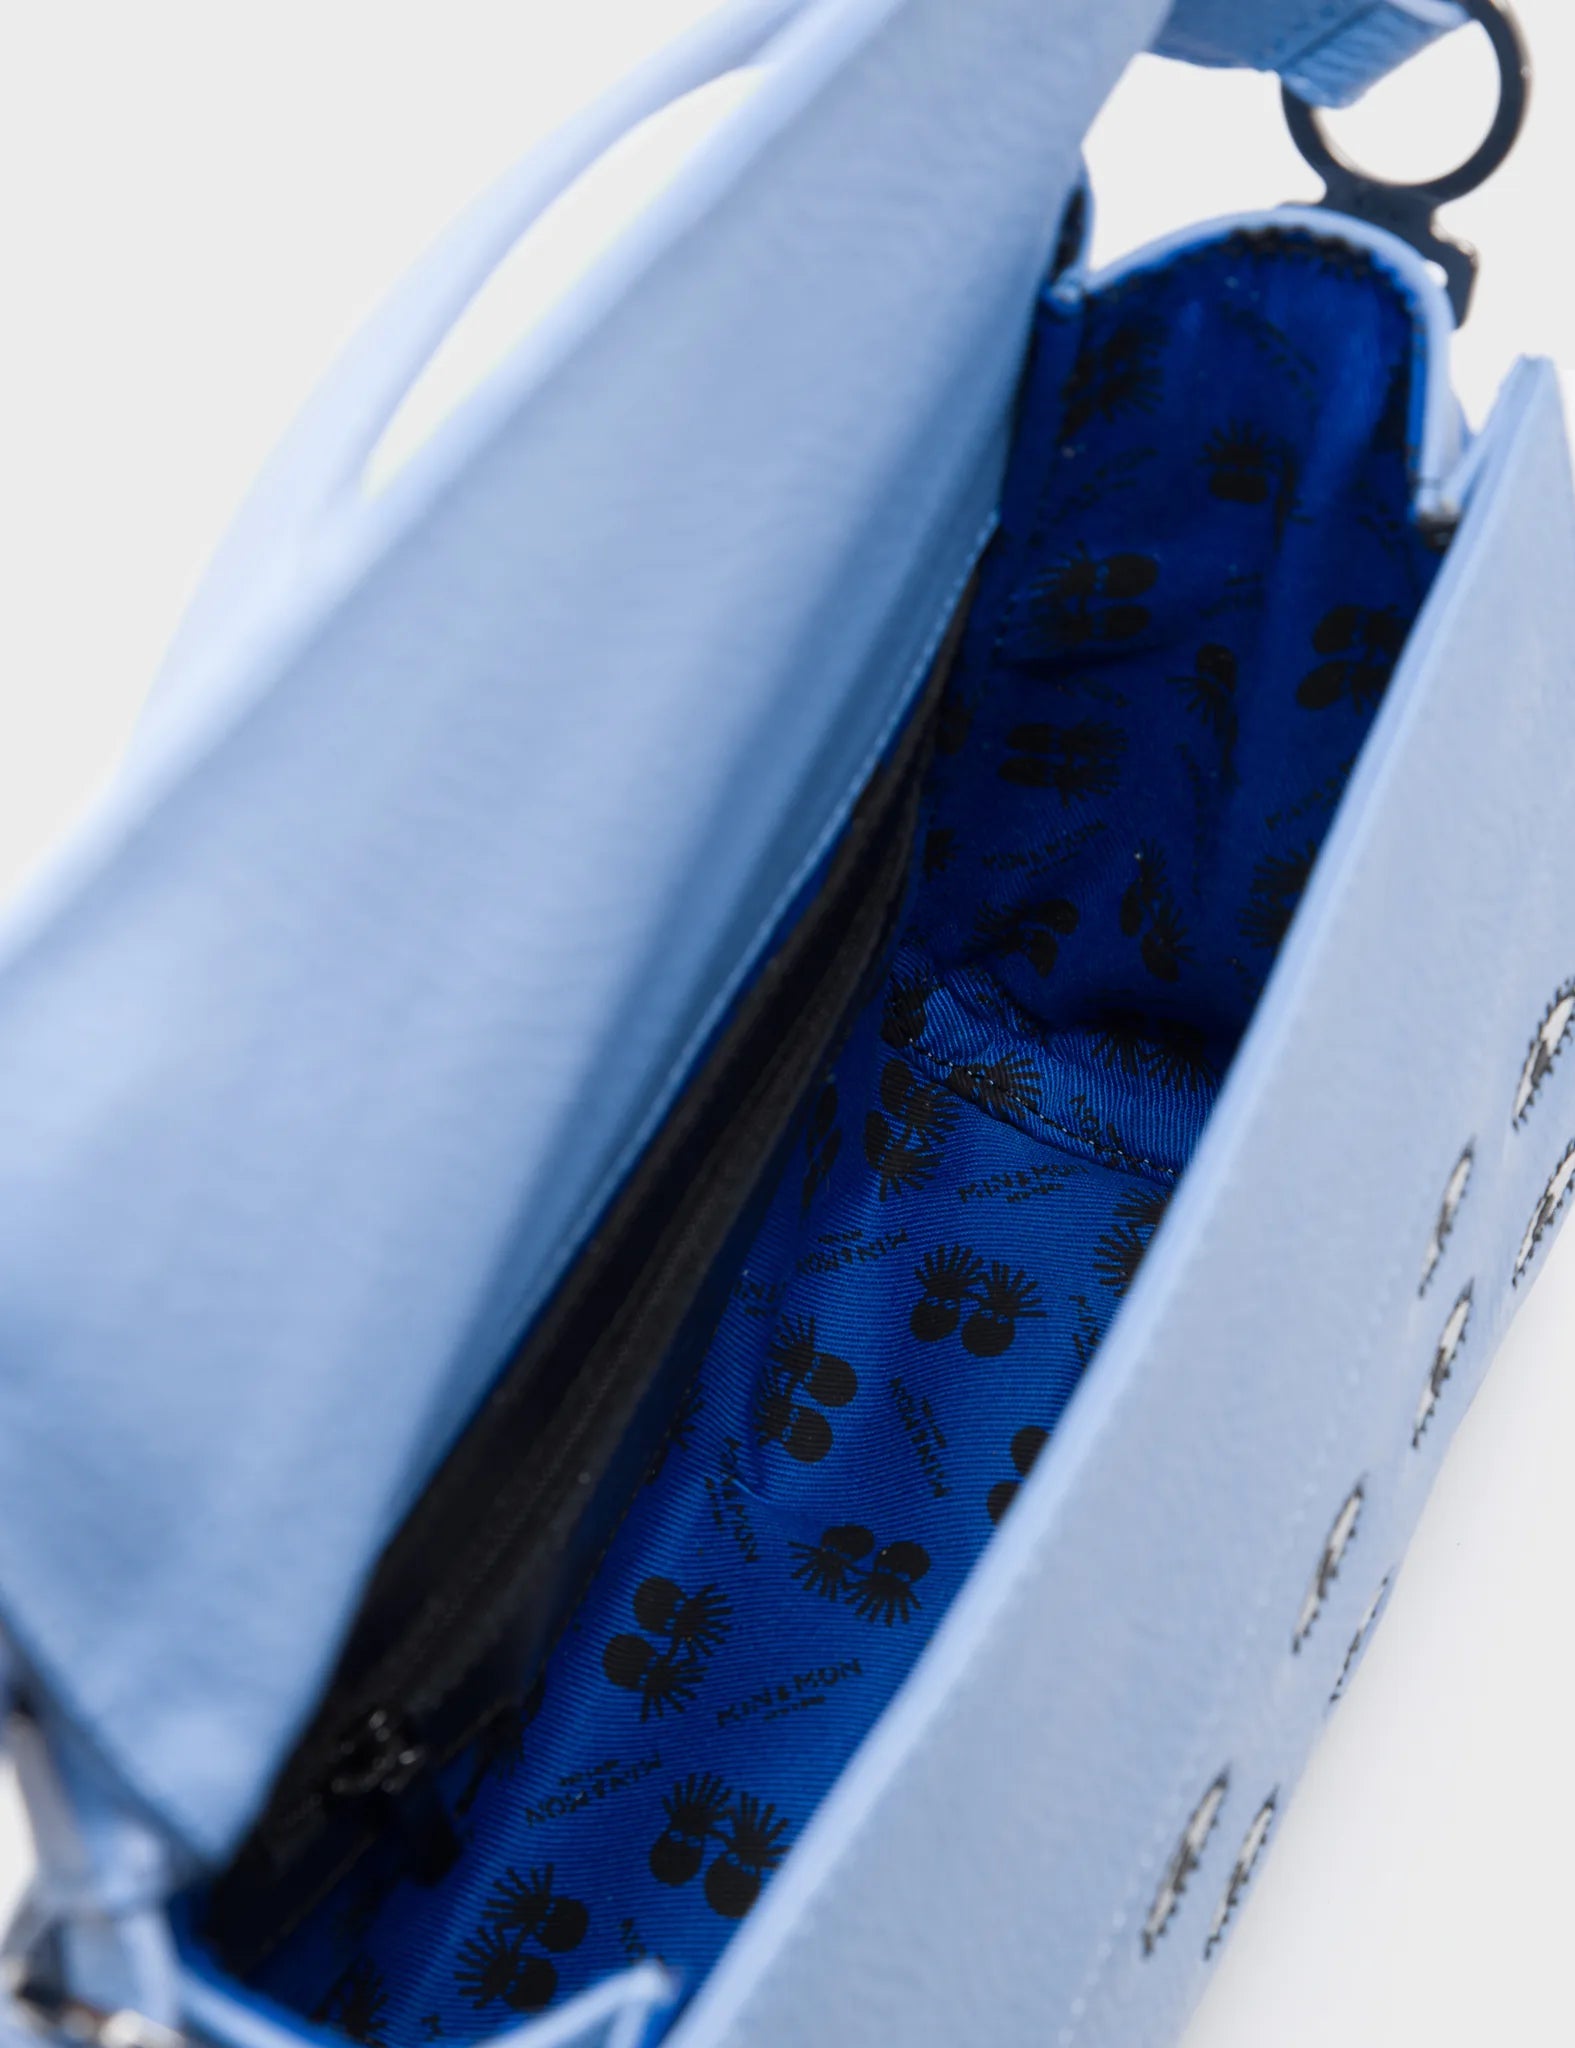 Mini Crossbody Handbag Vista Blue Leather - Eyes Embroidery - Inside